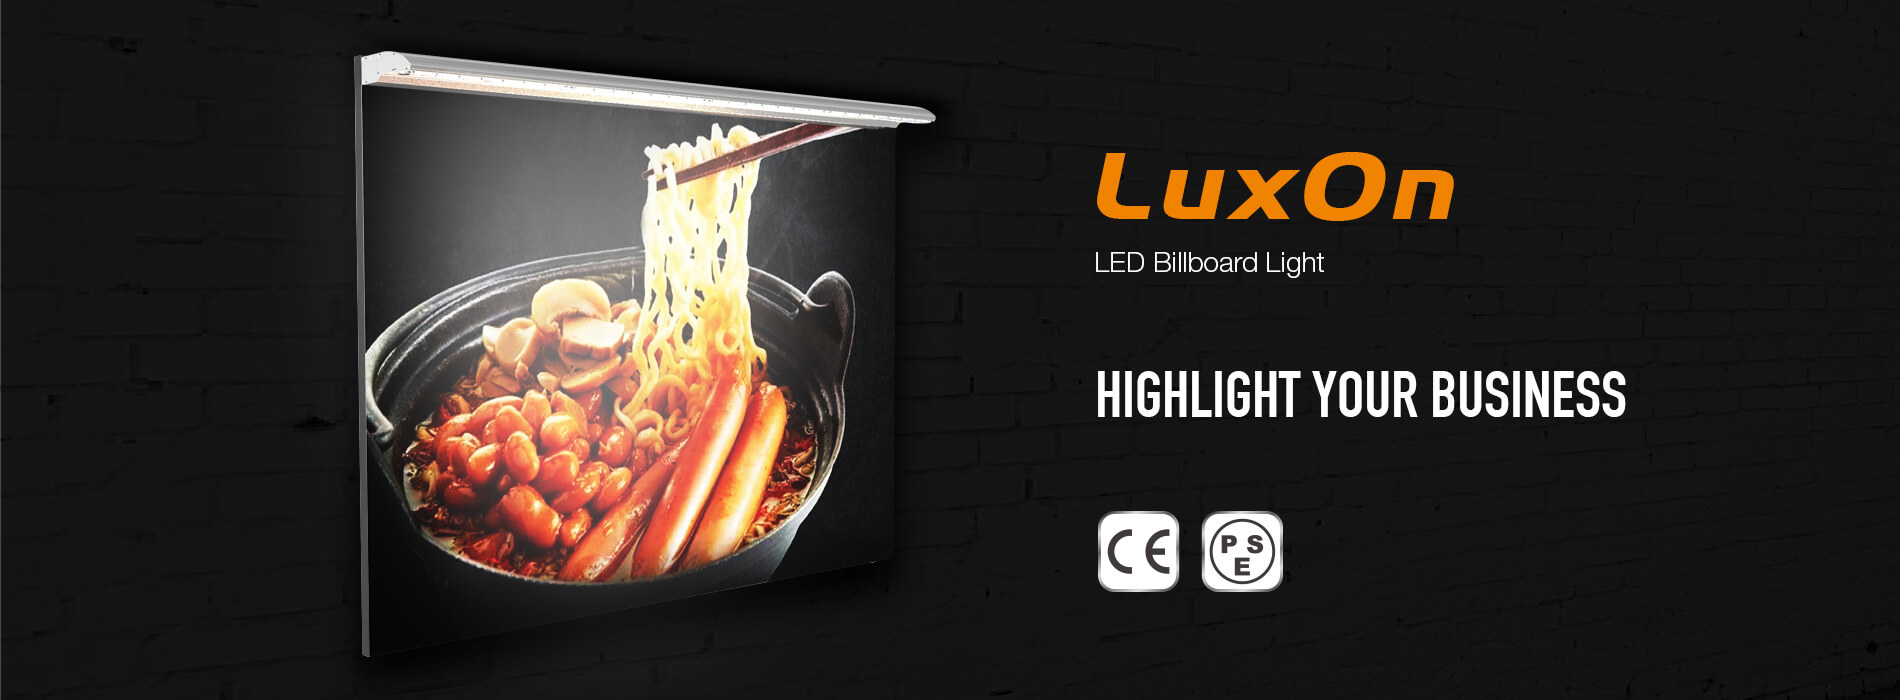 Luxon LED Billboard Light